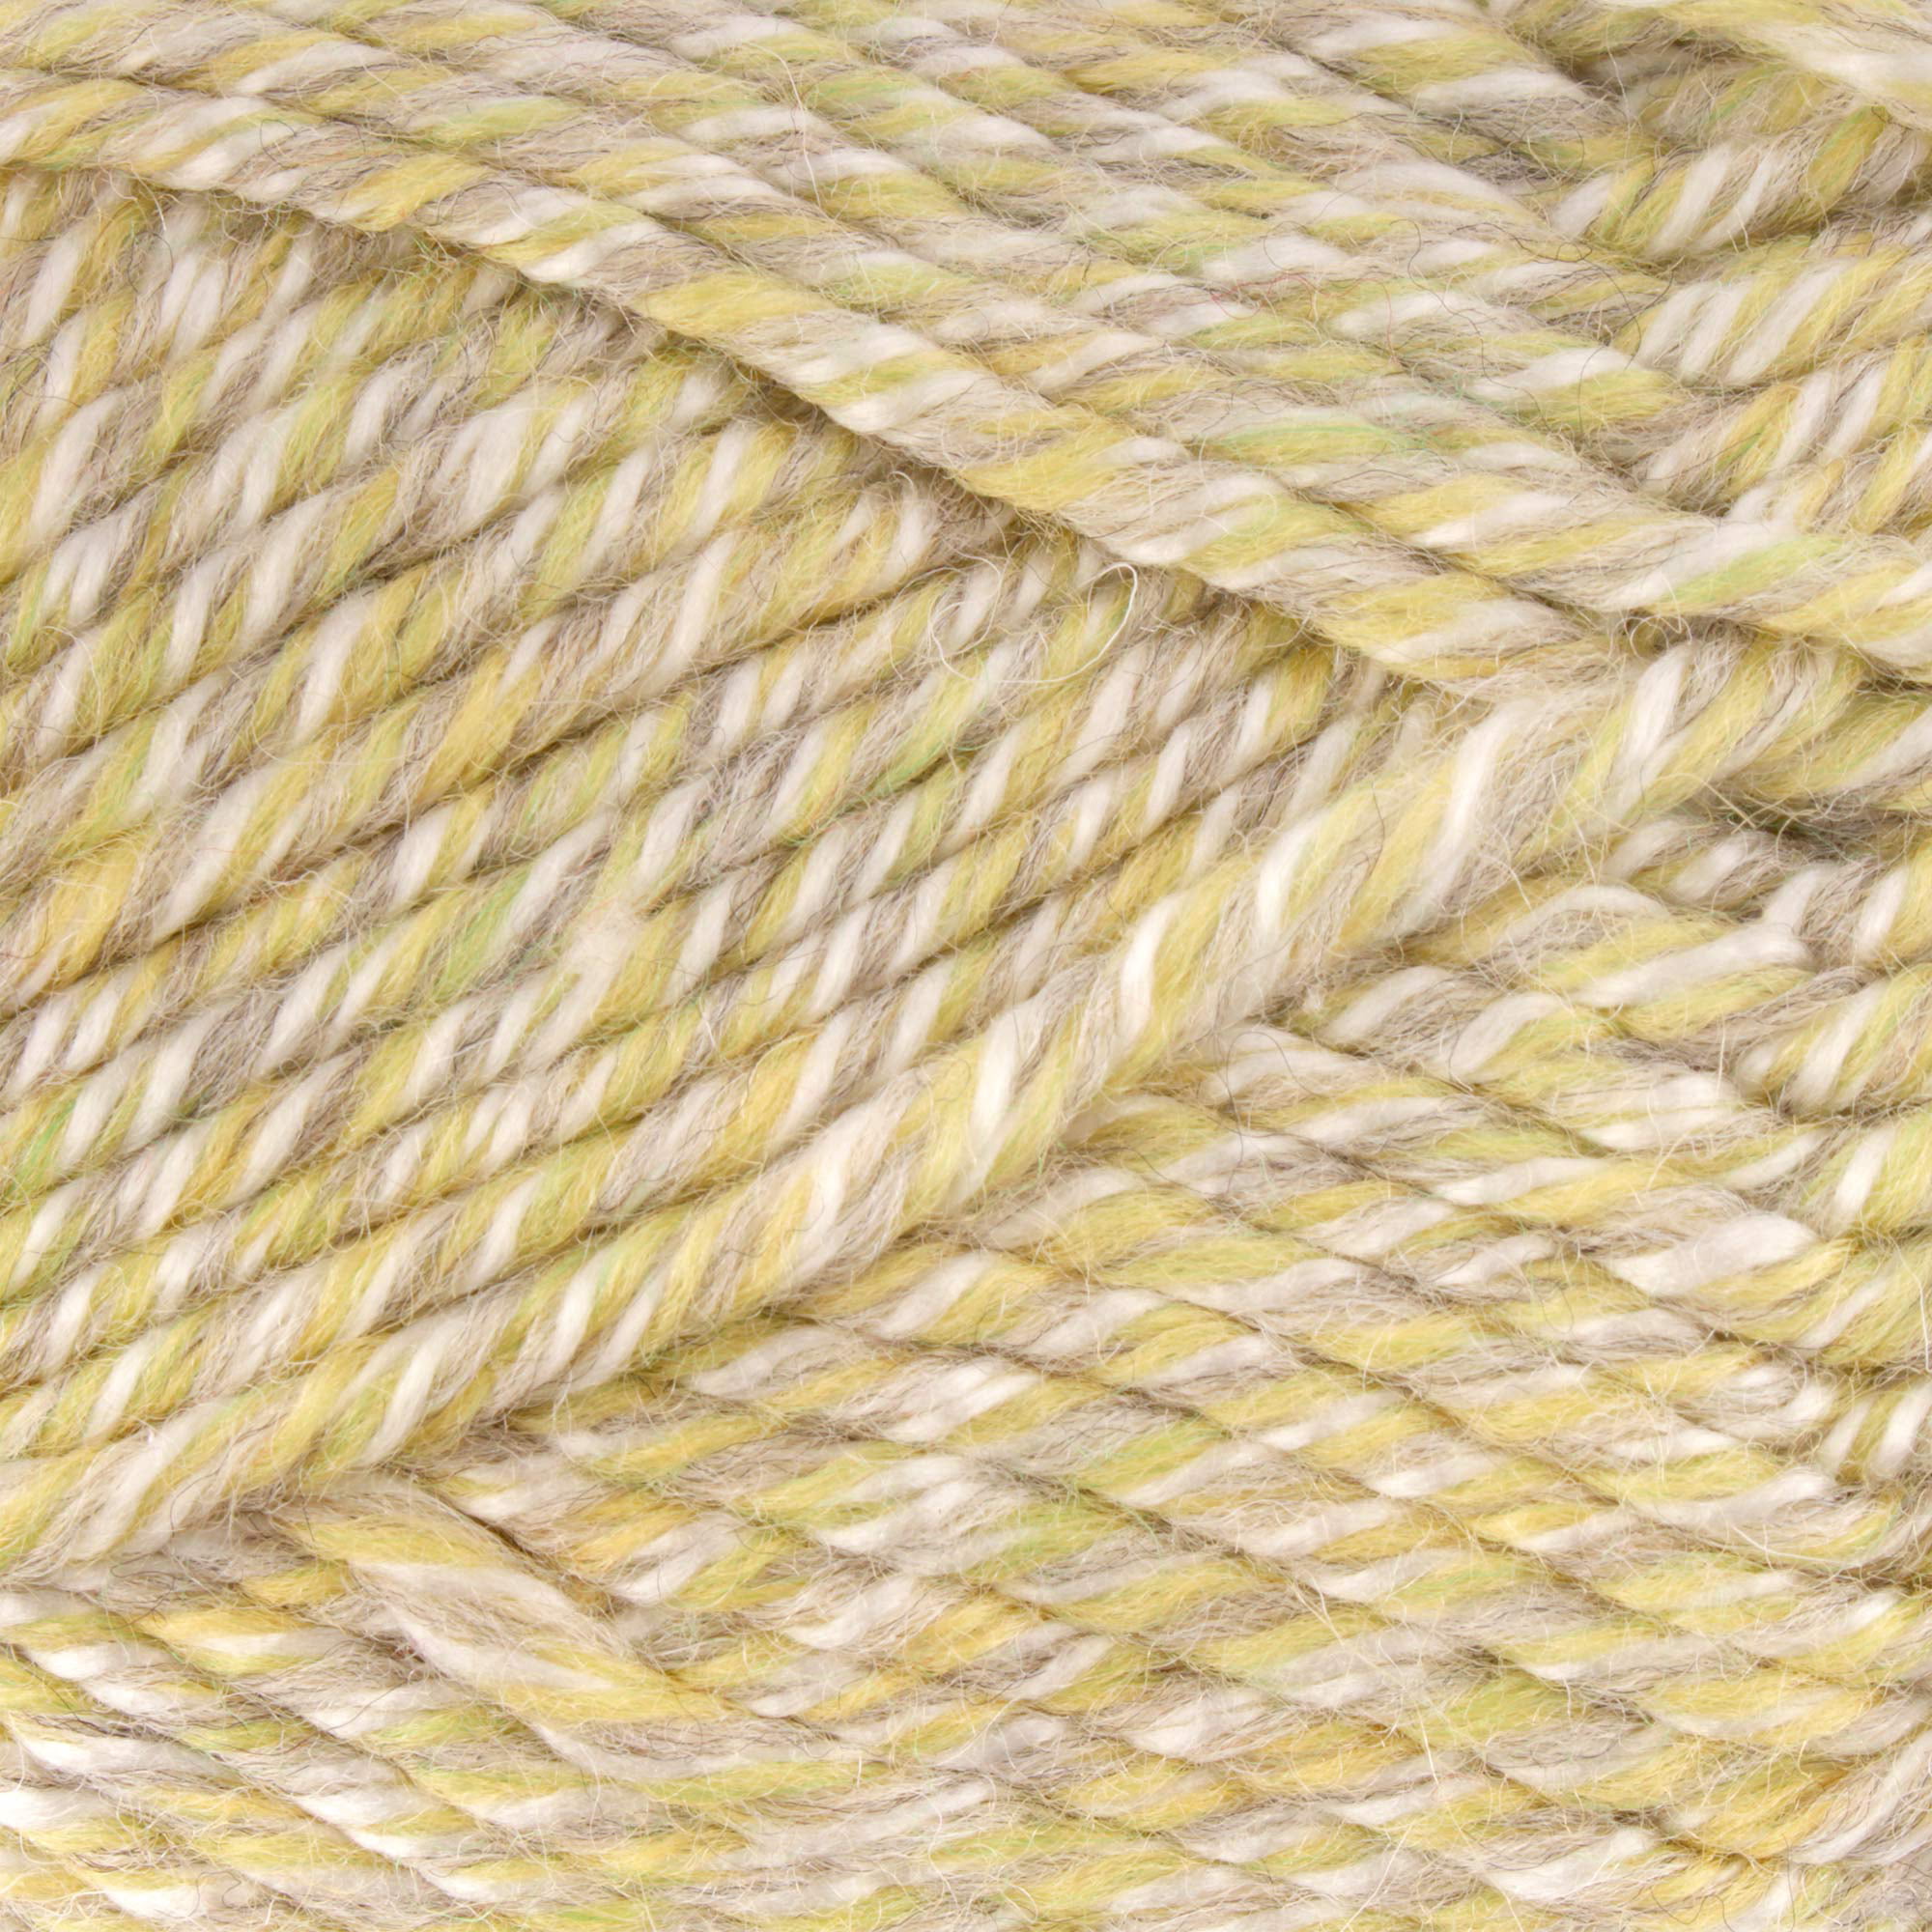 Chunky Melody Medium Weight Yarn - Oyster Heather - 70% Wool 30% Acrylic  Blend - 100g/skein - 2 Skeins